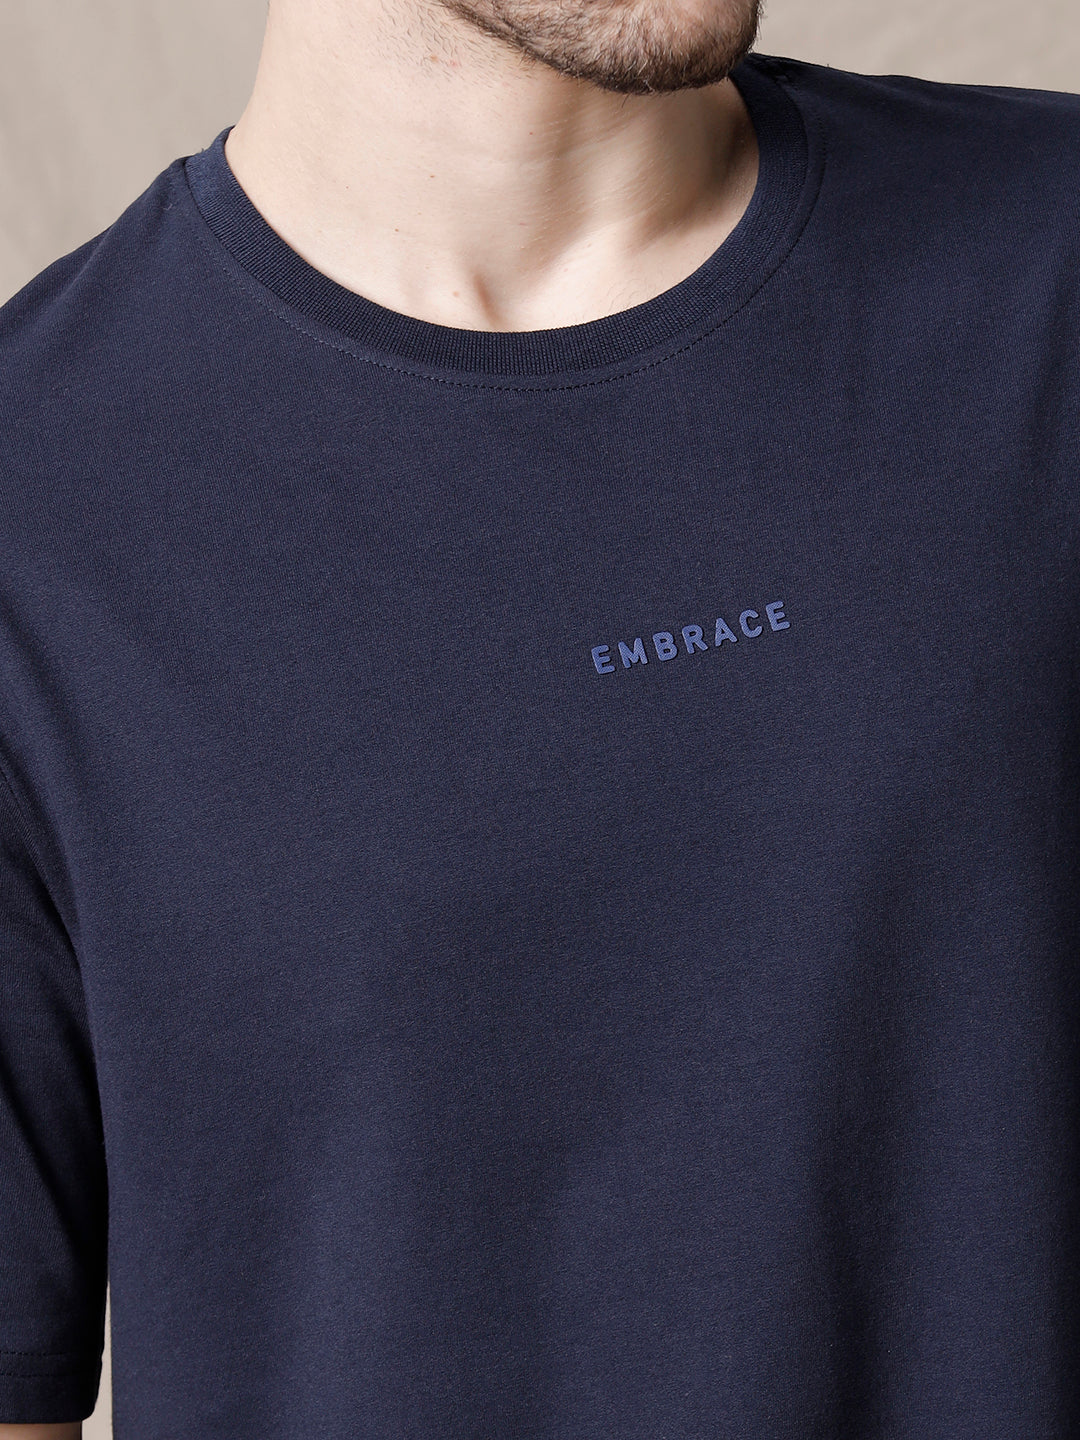 Embrace Printed T-Shirt